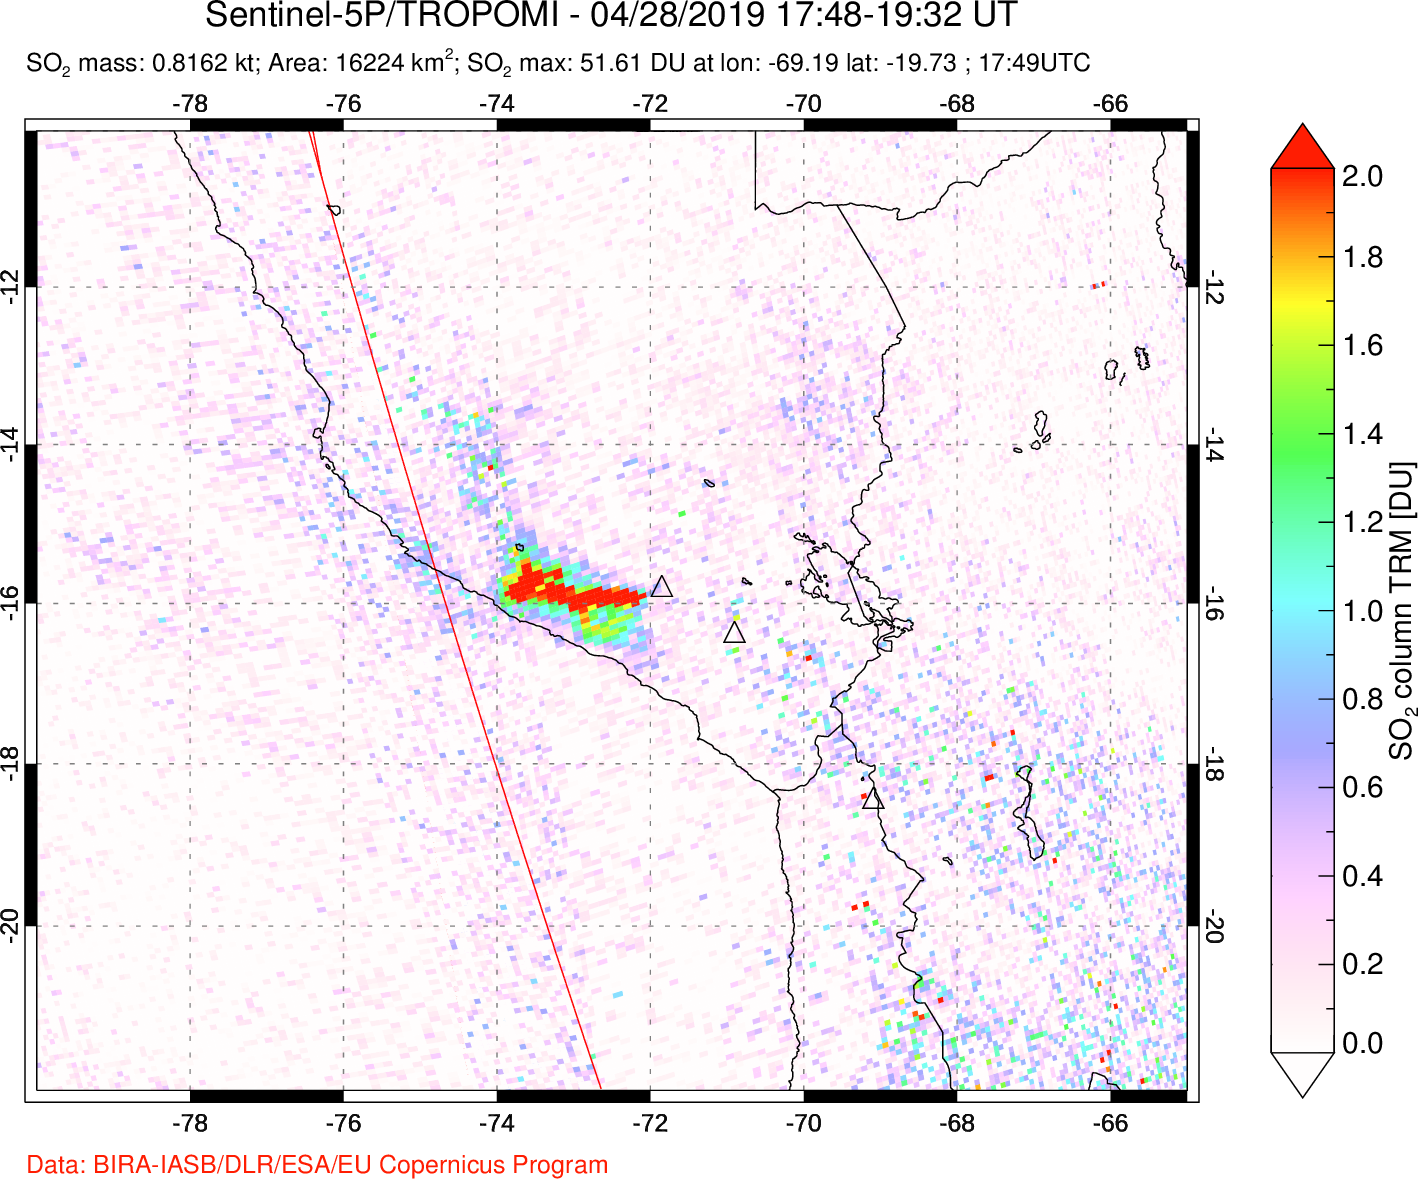 A sulfur dioxide image over Peru on Apr 28, 2019.